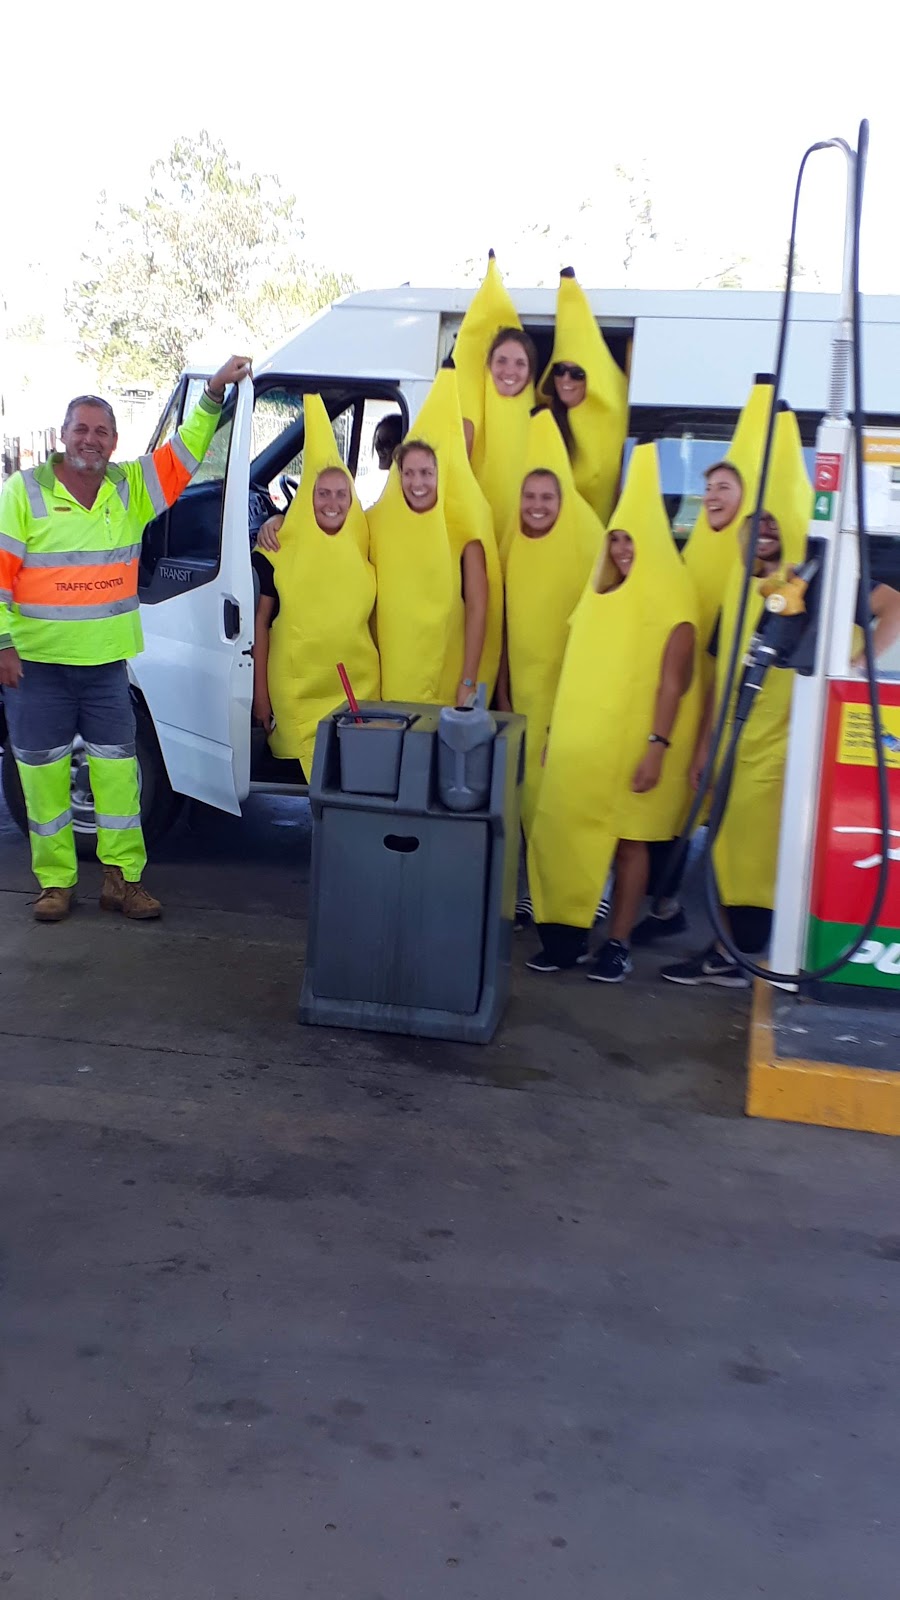 Puma Banana Truck Stop | gas station | Cnr Bowen &, Charles St, Banana QLD 4702, Australia | 0749957243 OR +61 7 4995 7243